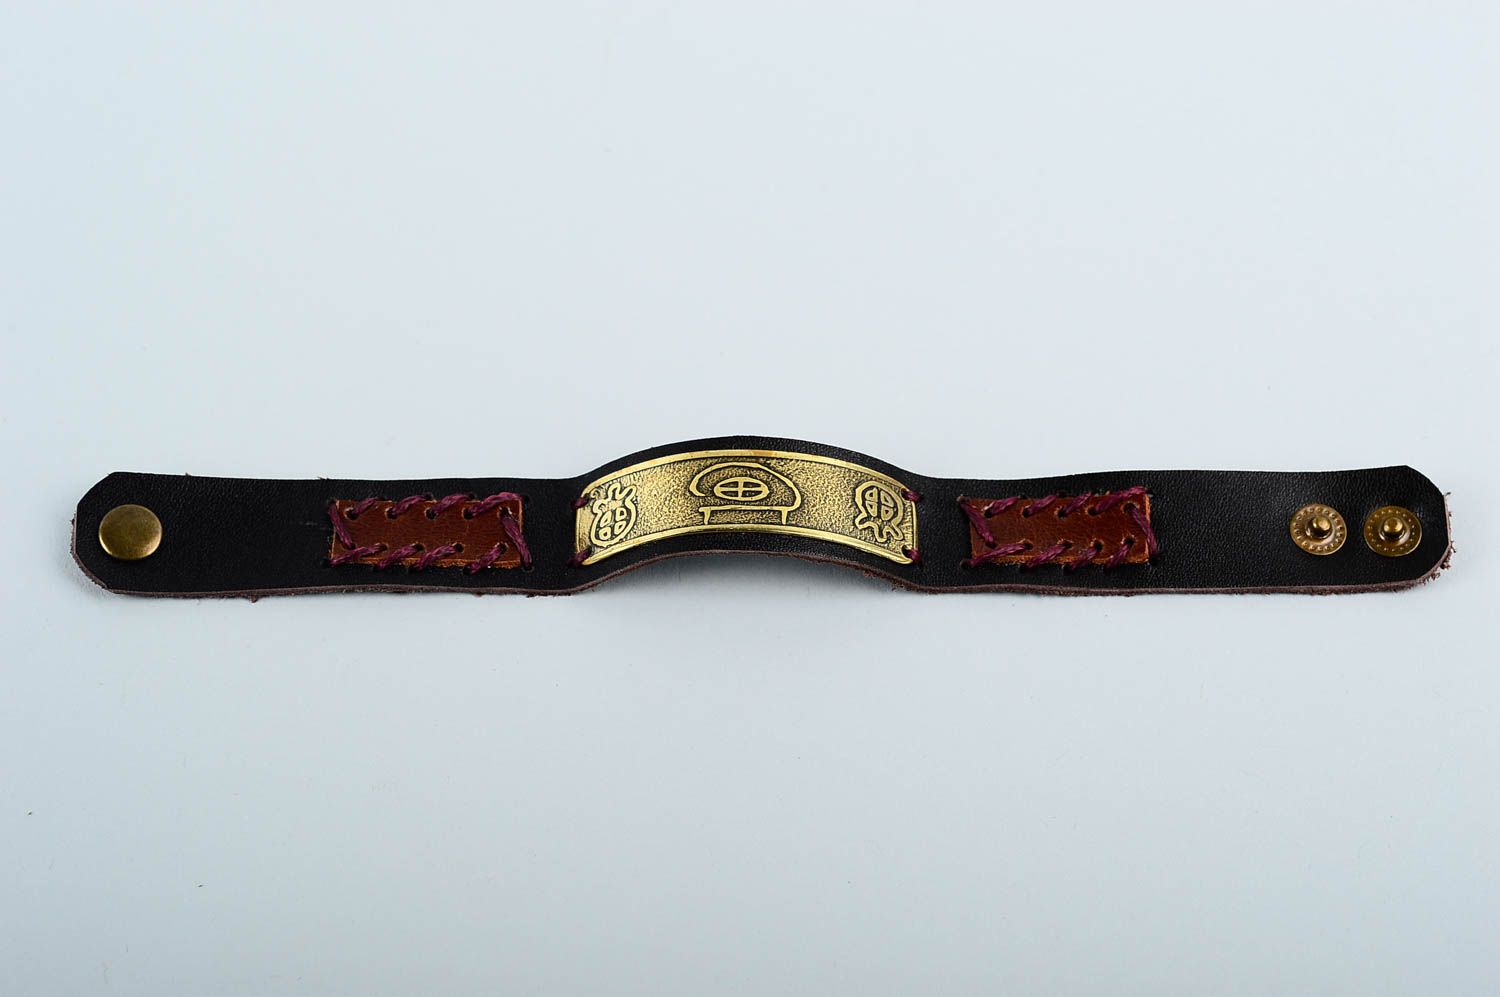 Unusual handmade leather bracelet leather goods artisan jewelry ideas photo 2